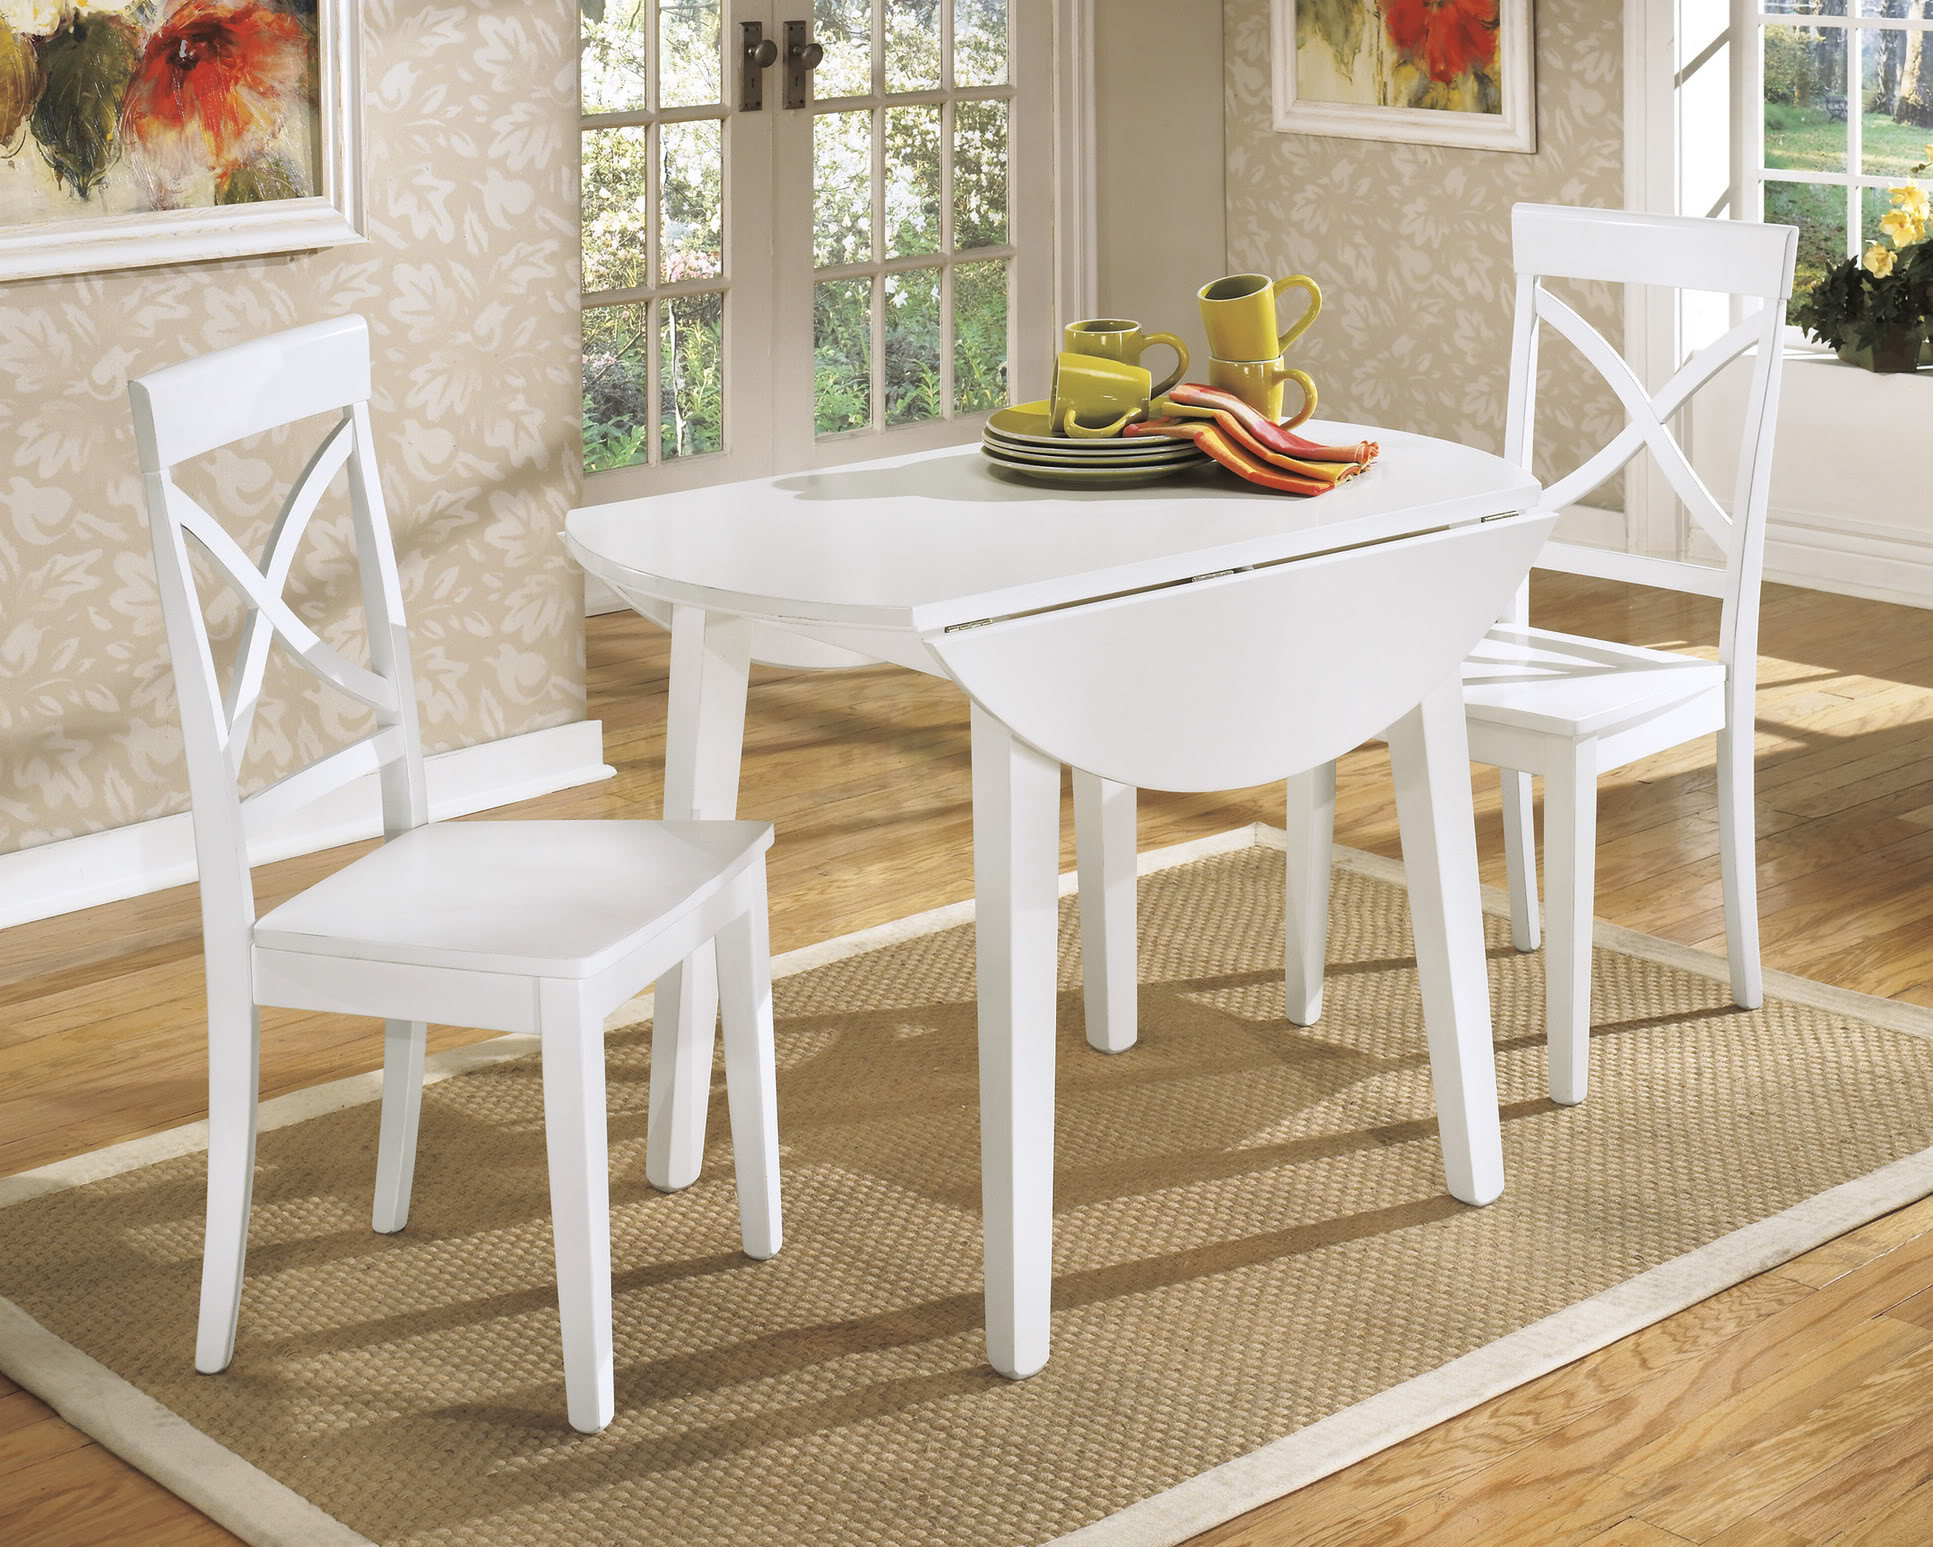 Round White Kitchen Table Set
 White Round Kitchen Table and Chairs Design – HomesFeed